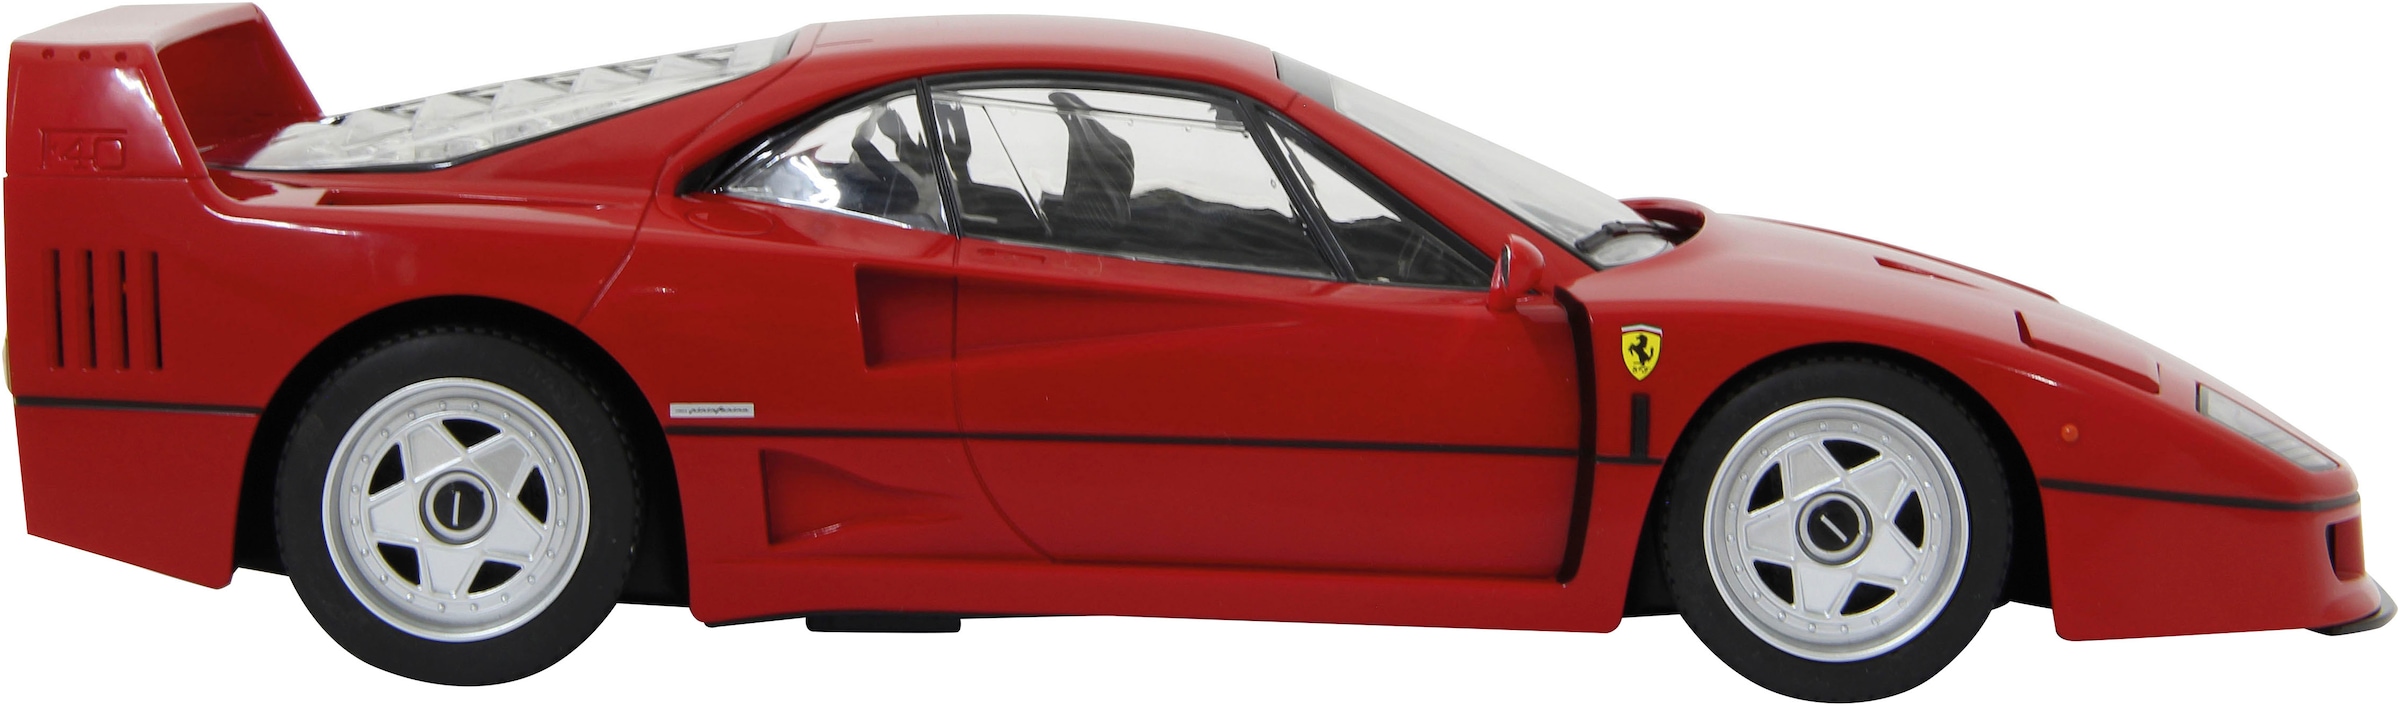 Jamara RC-Auto »Deluxe Cars, Ferrari F40, 1:14, rot, 27MHz«, mit LED-Licht